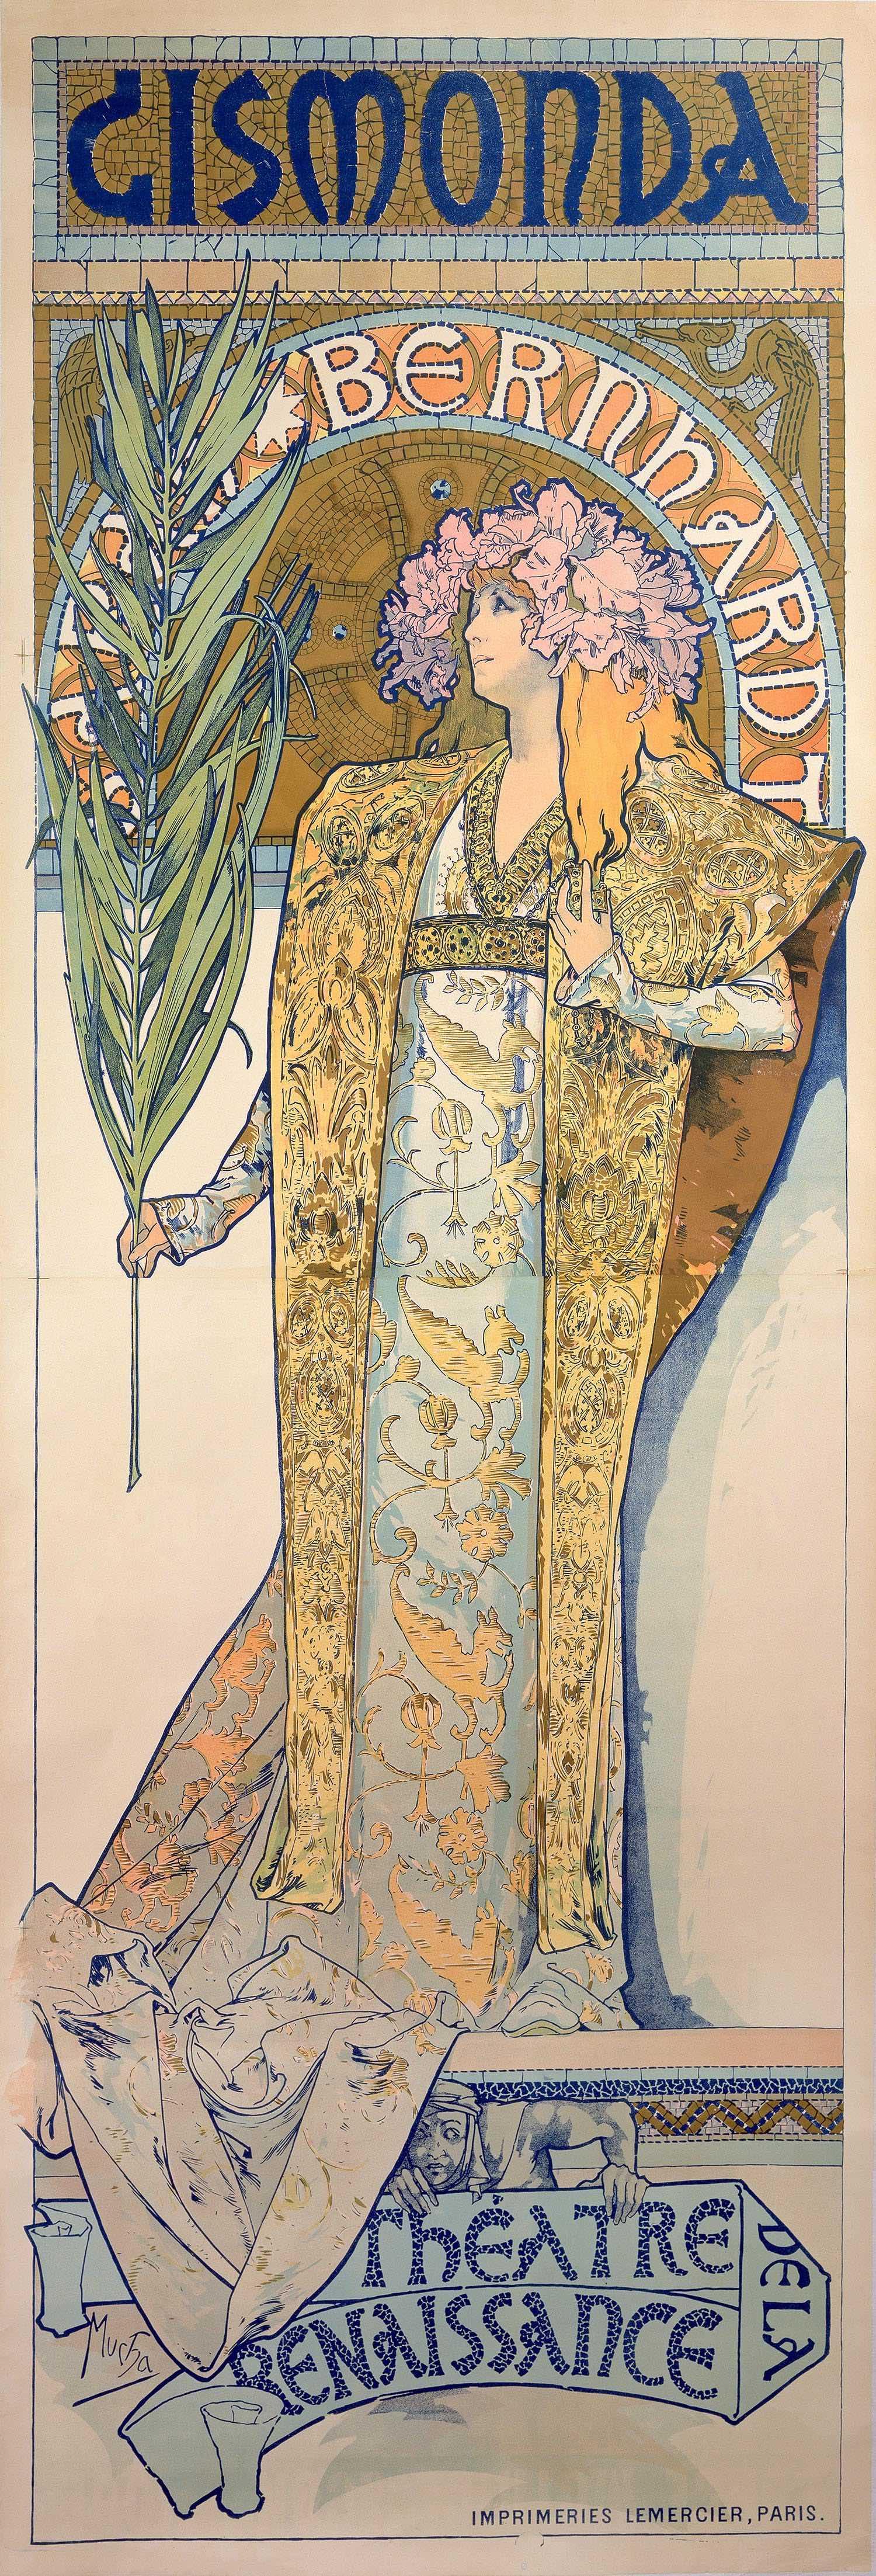 NCMA's Dazzling Alphonse Mucha Show Lauds Art Nouveau Visionary 